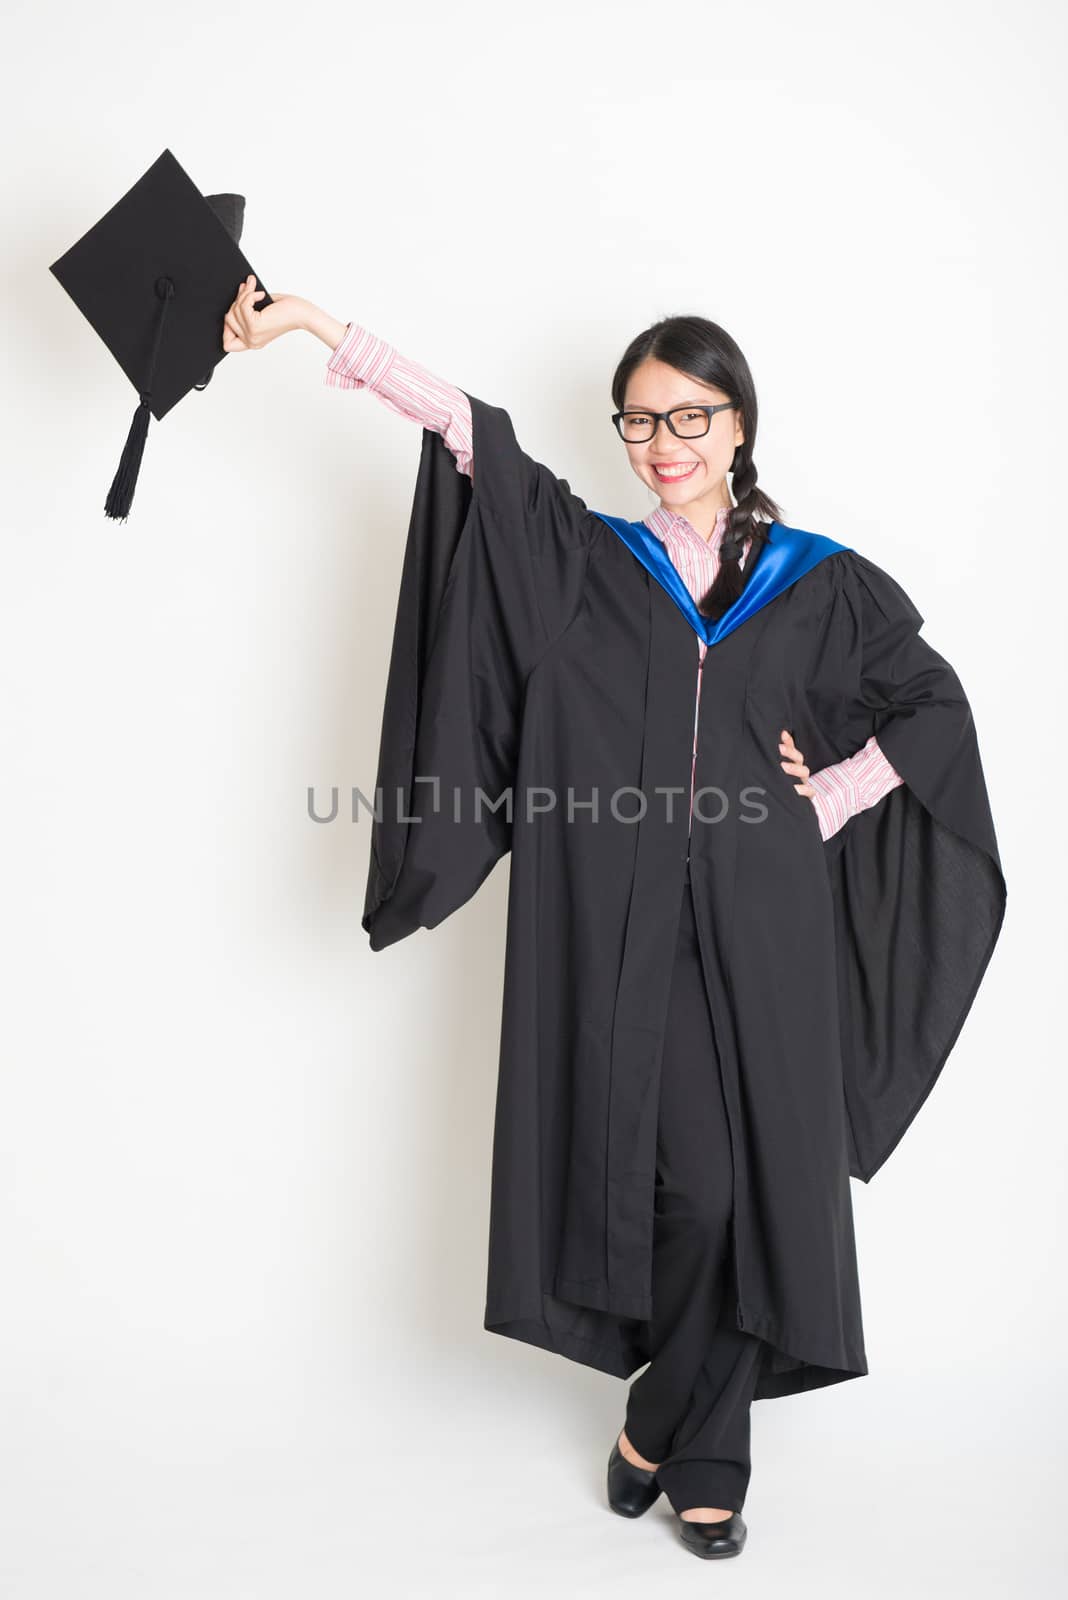 University student in graduation gown hand raised holding mortarboard. Full body portrait of east  Asian female model standing on plain background.